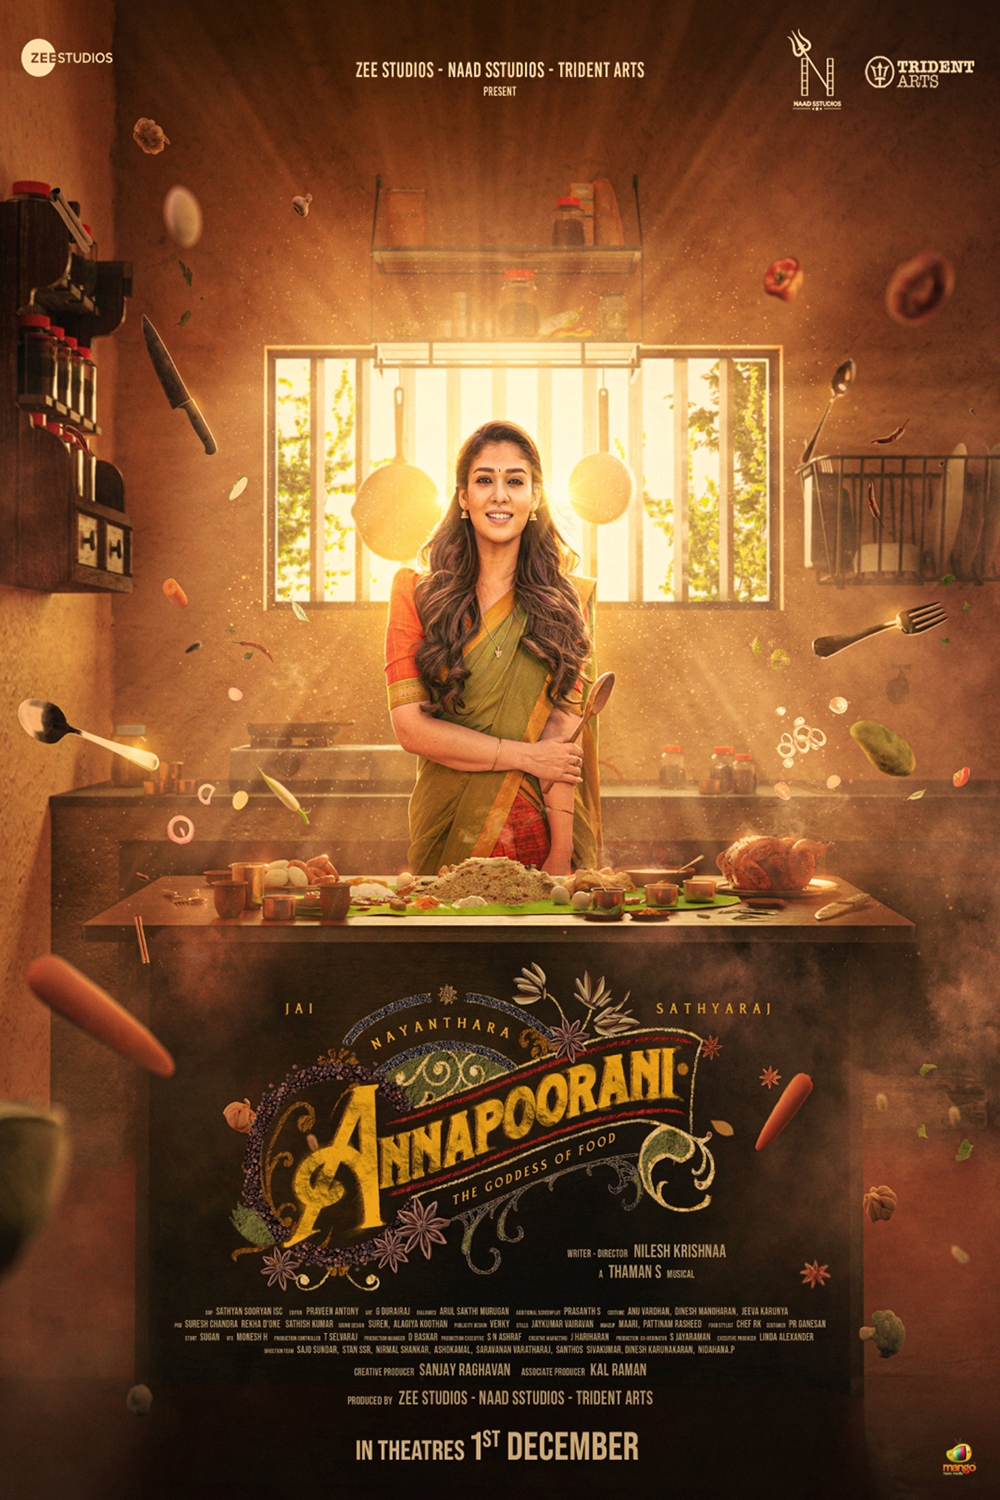 Still of Annapoorani: The Goddess of Food